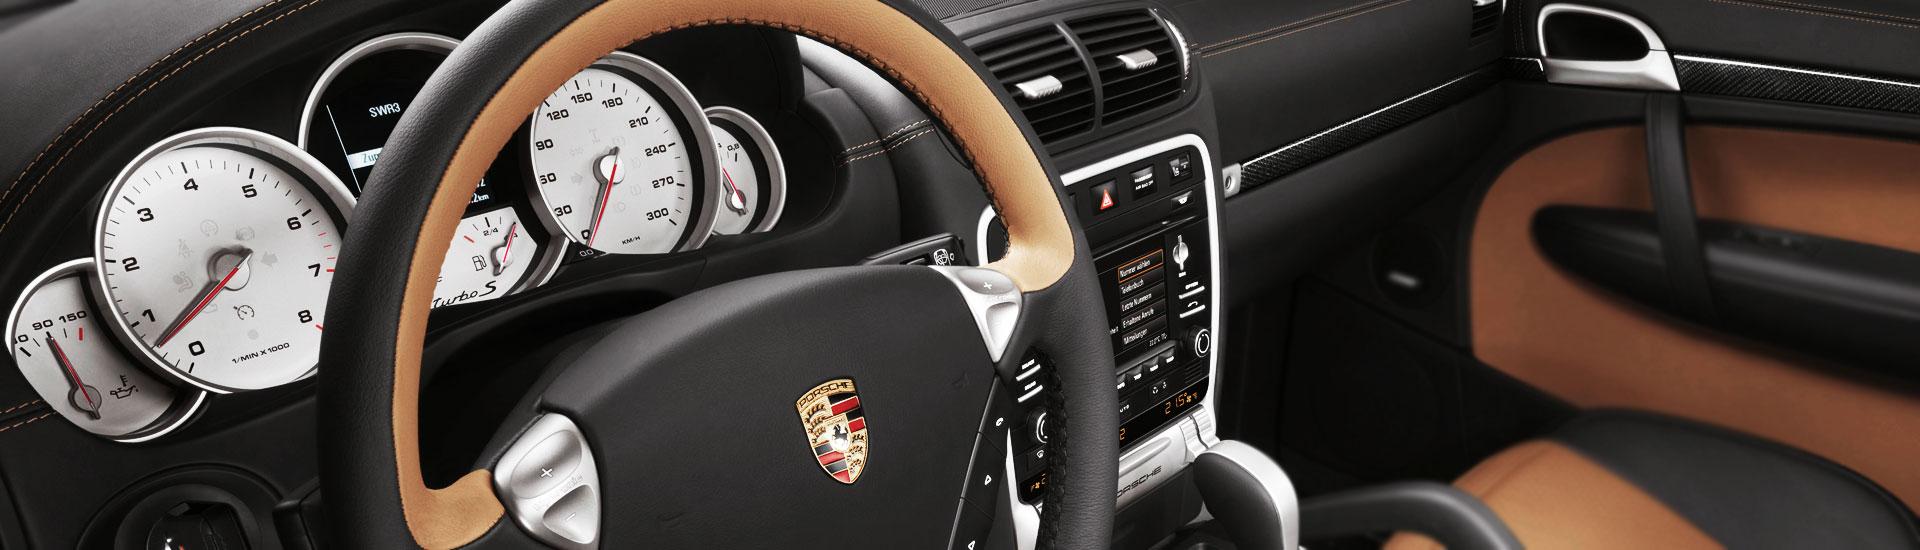 2020 Porsche Macan Custom Dash Kits